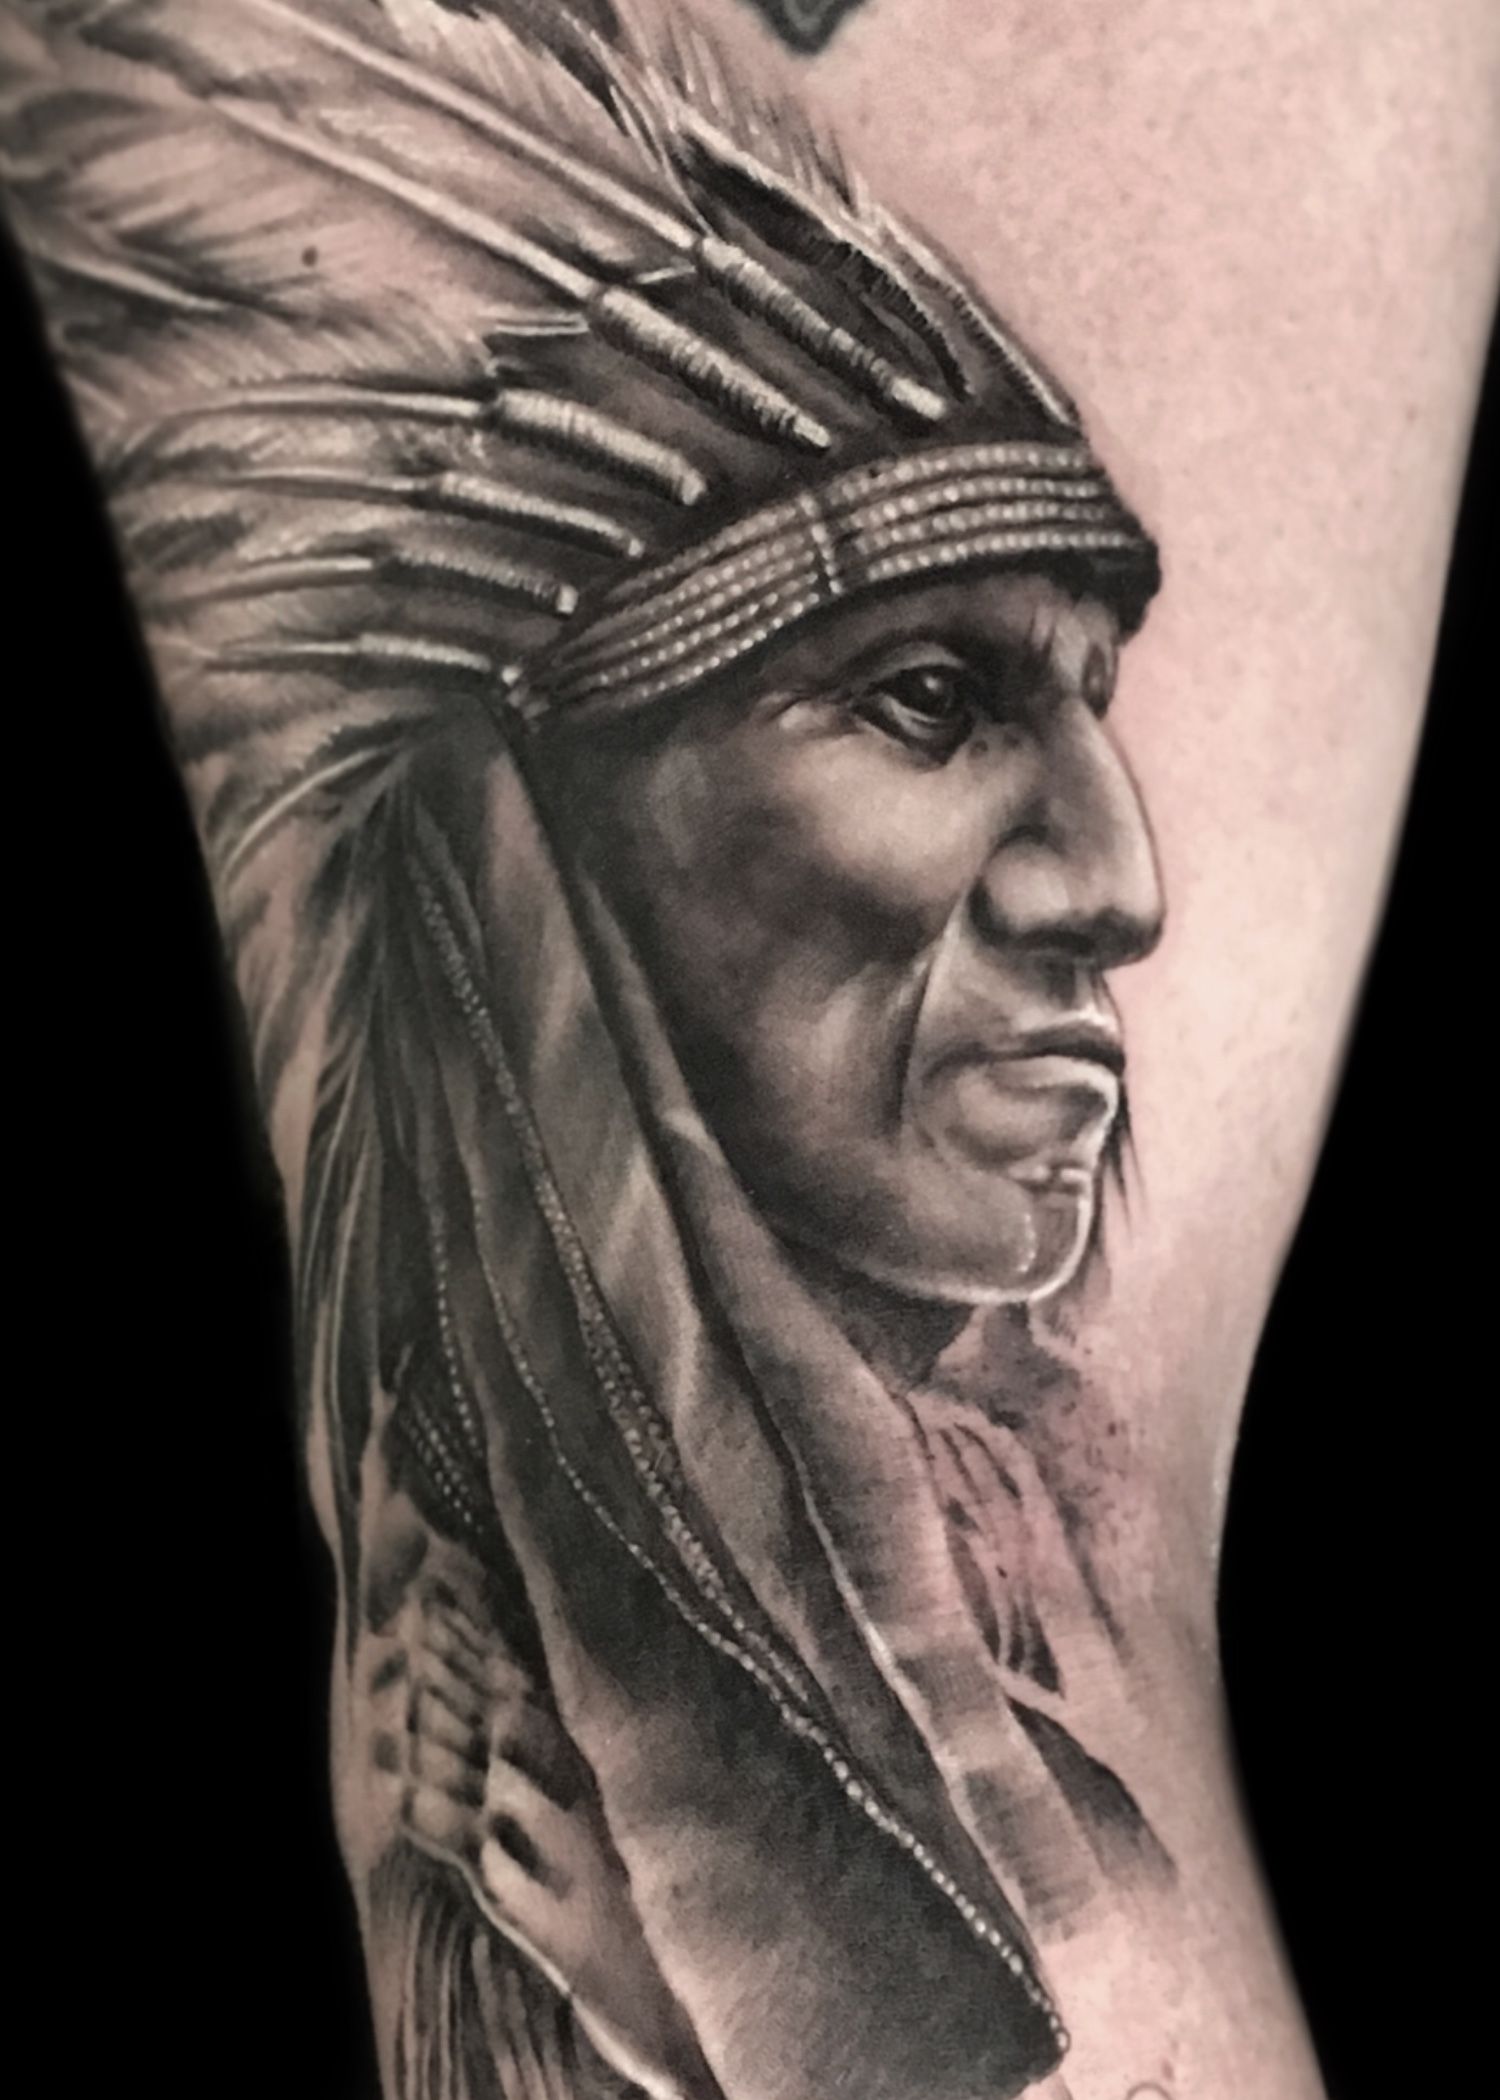 Flower and Tribal Armband Tattoo Design - TattooWoo.com